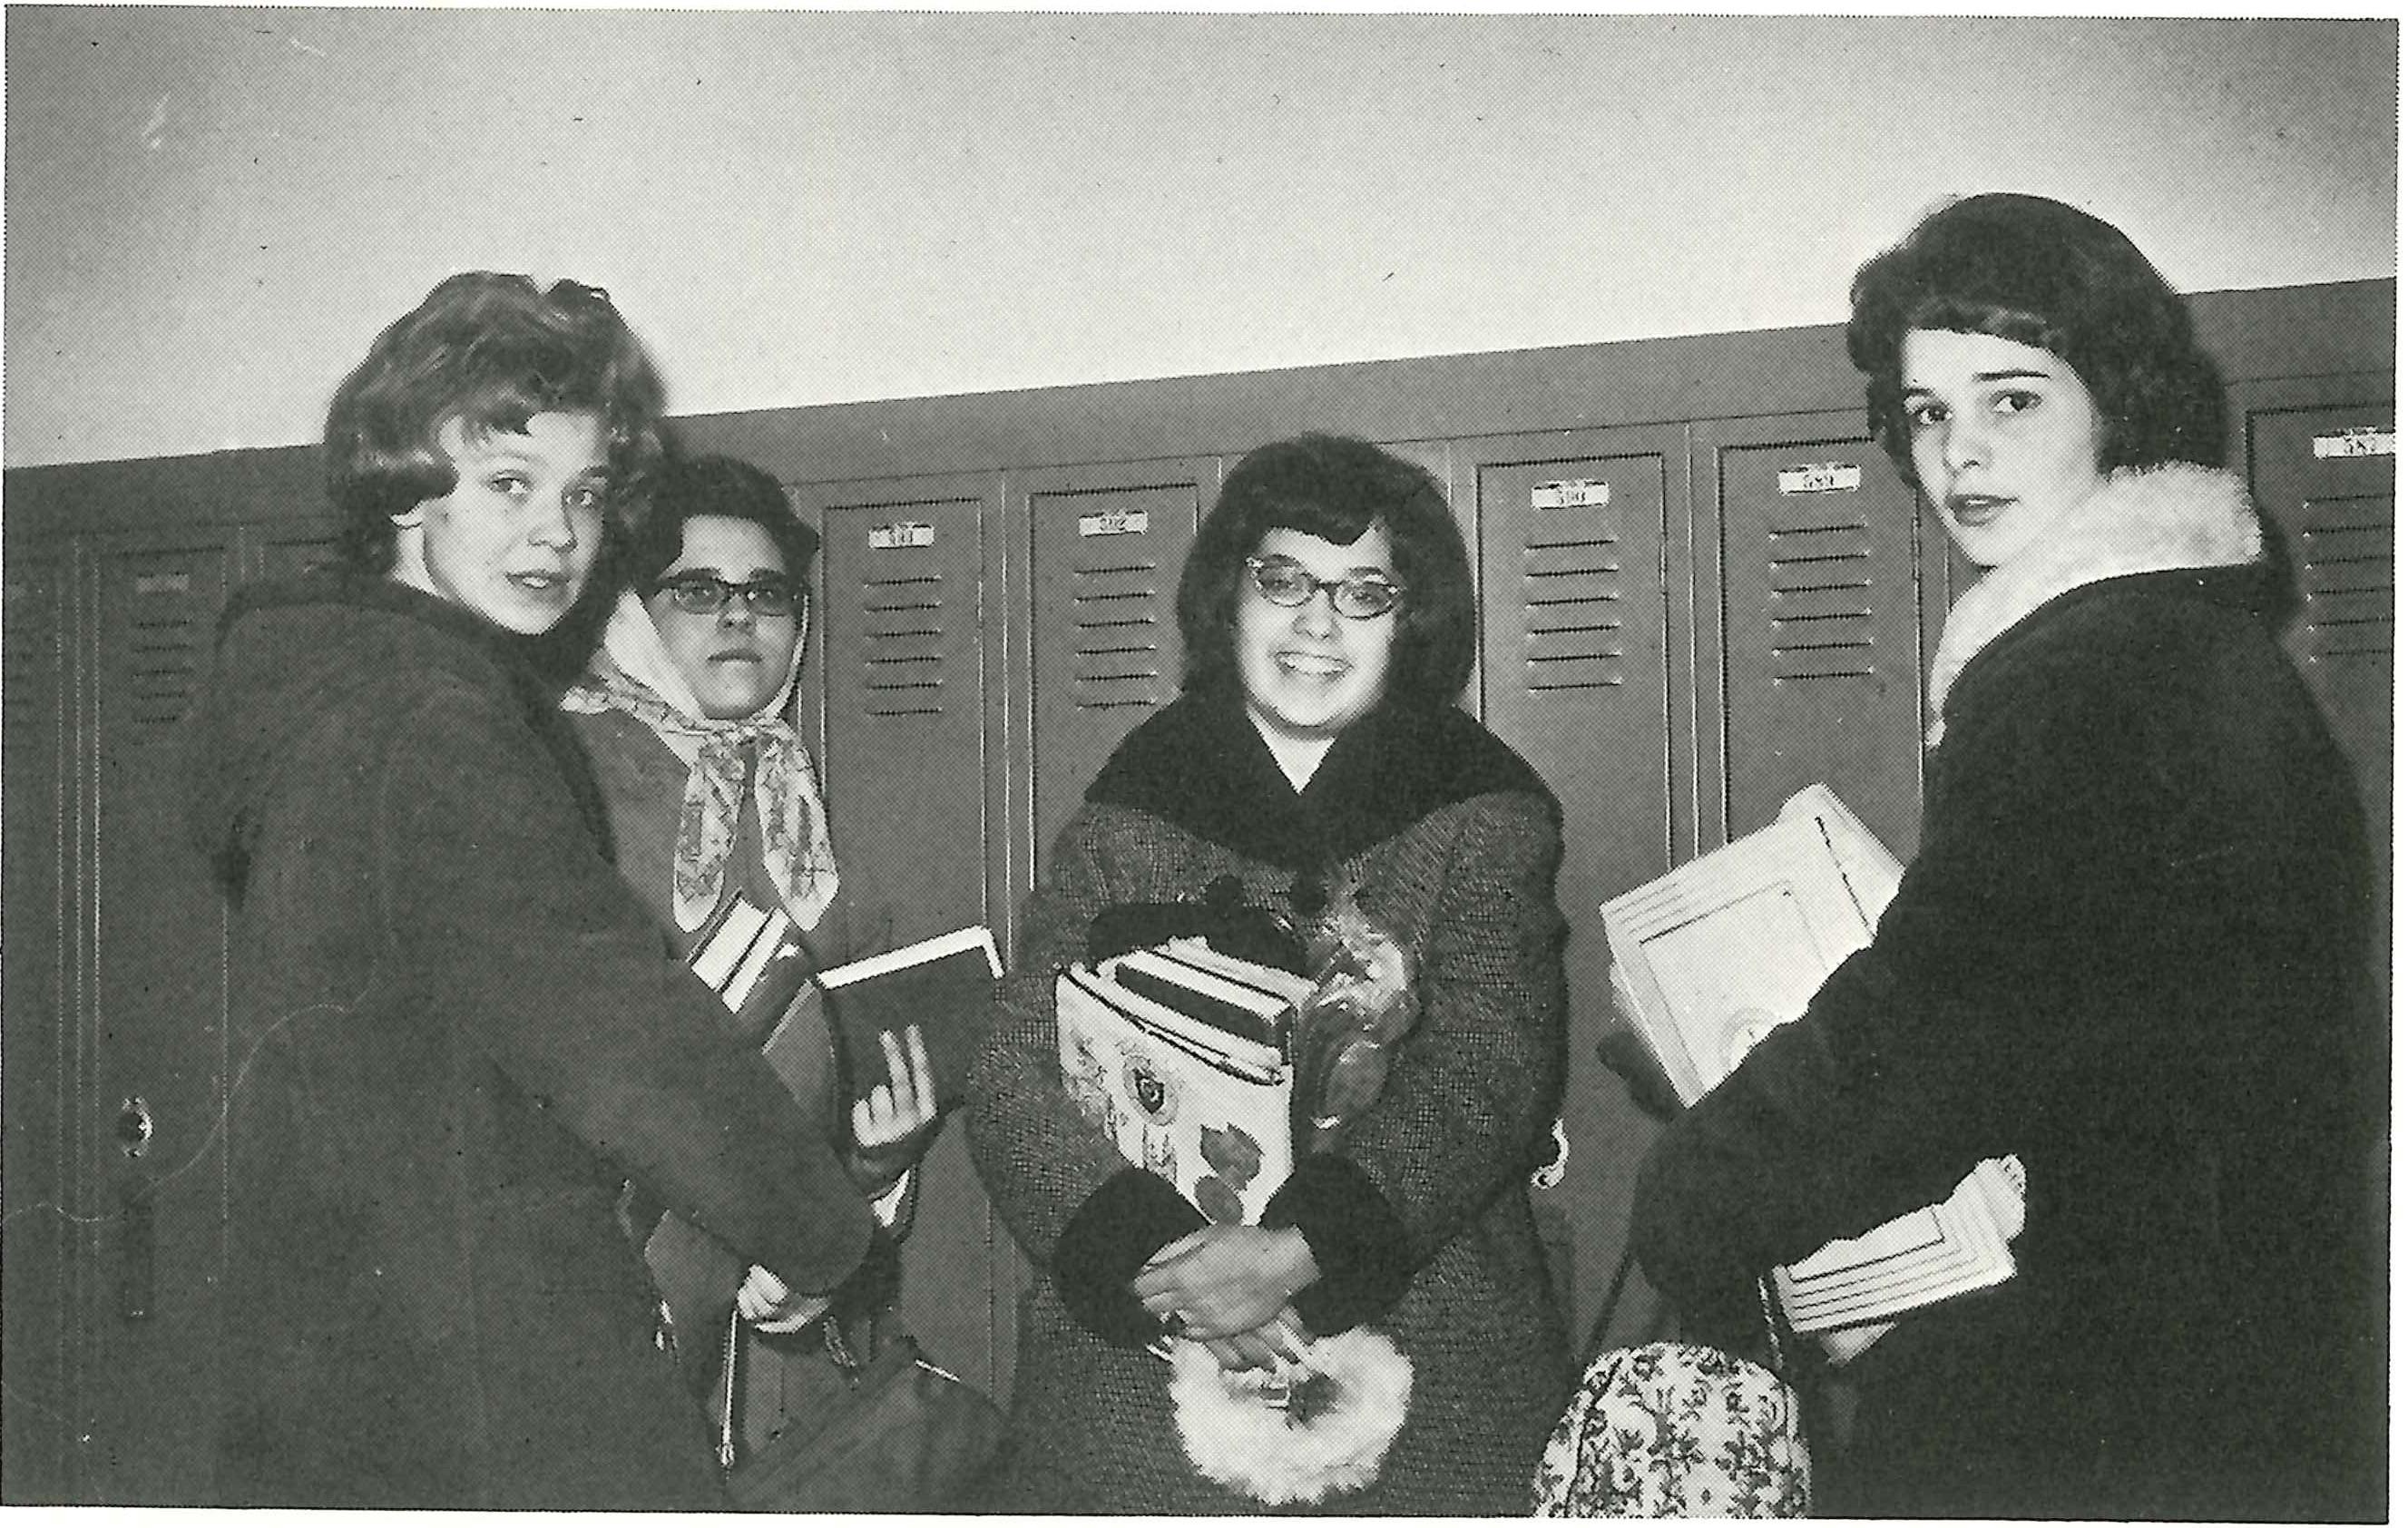 High School Girls from 1965 by locker